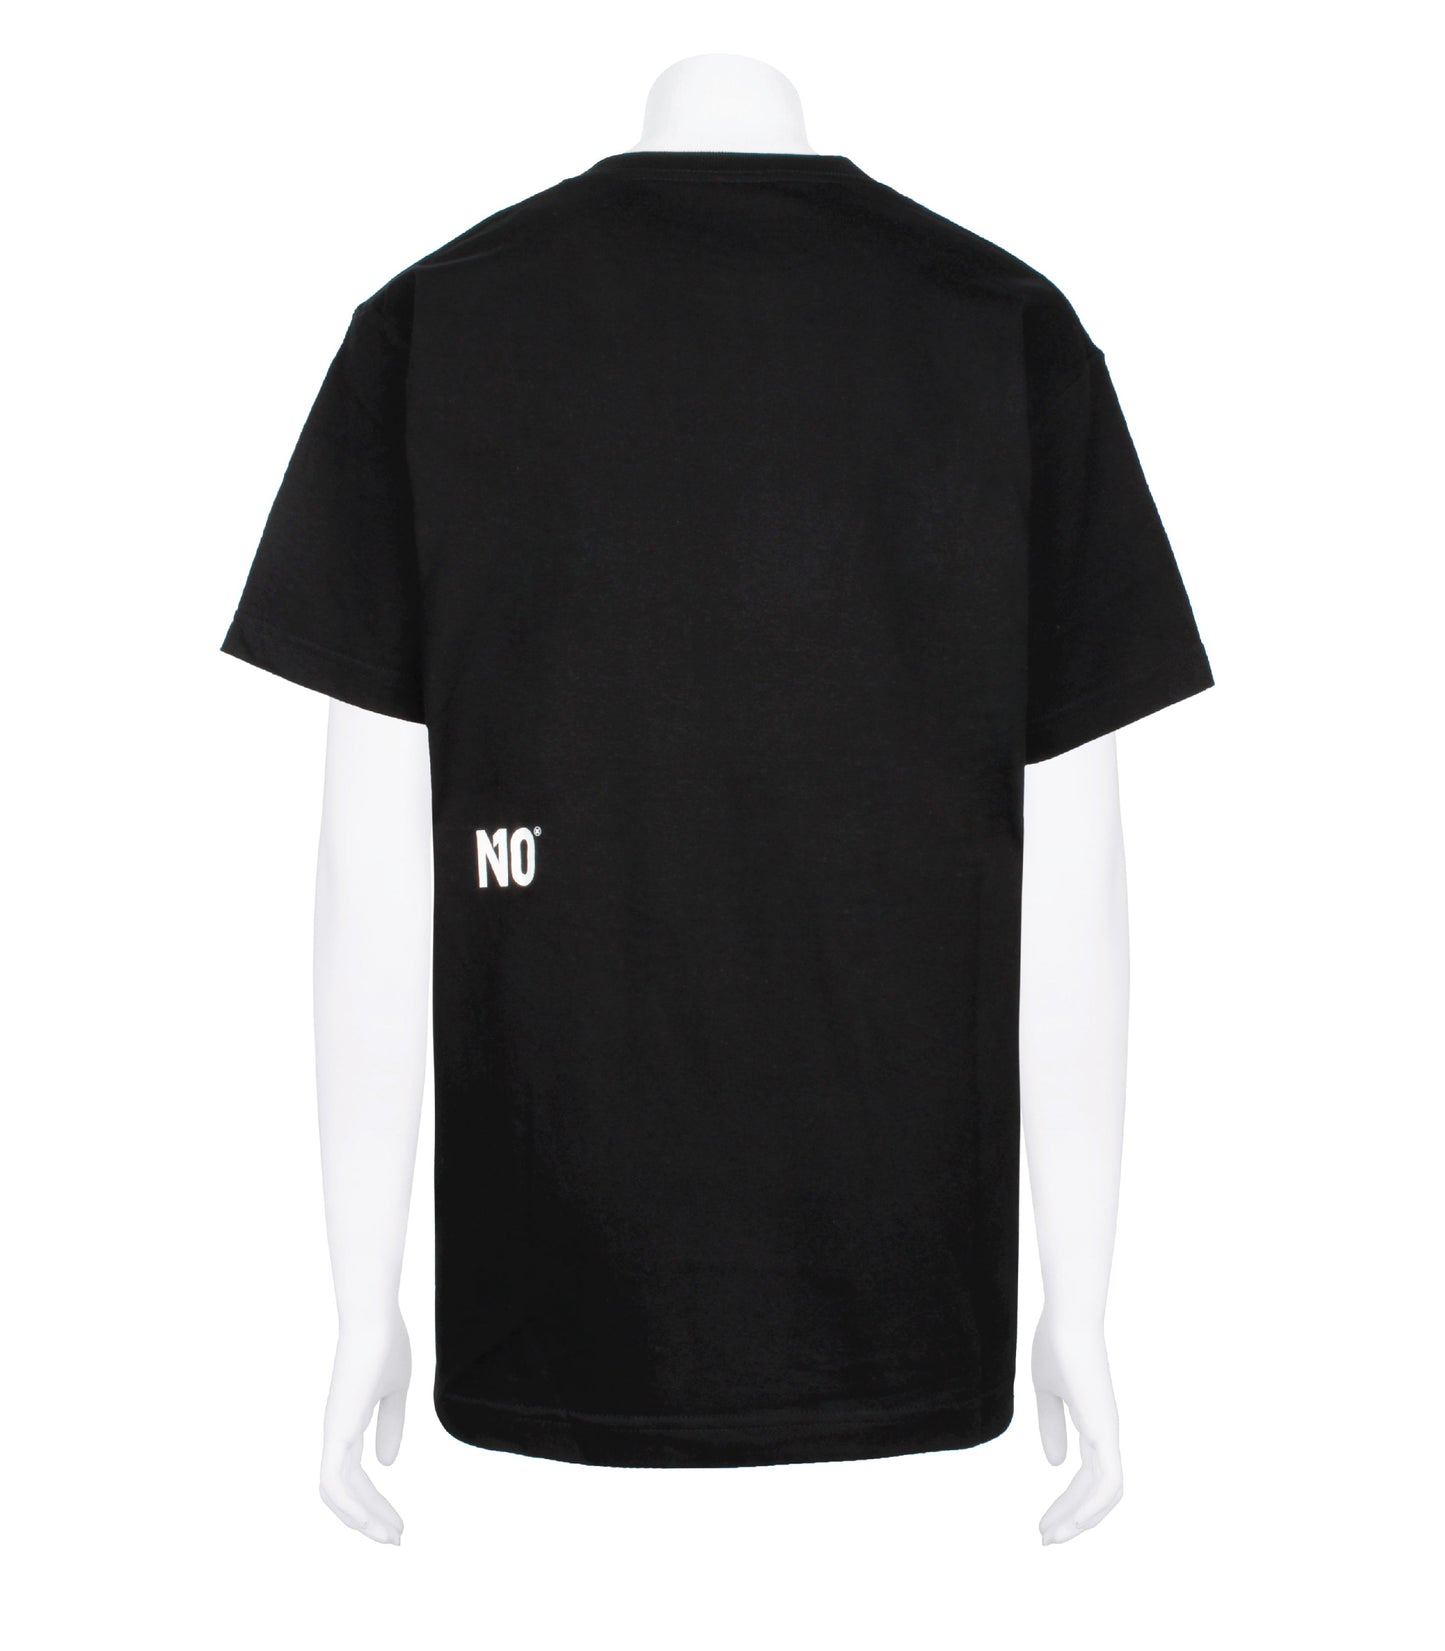 No Balance T-Shirt (Unisex)